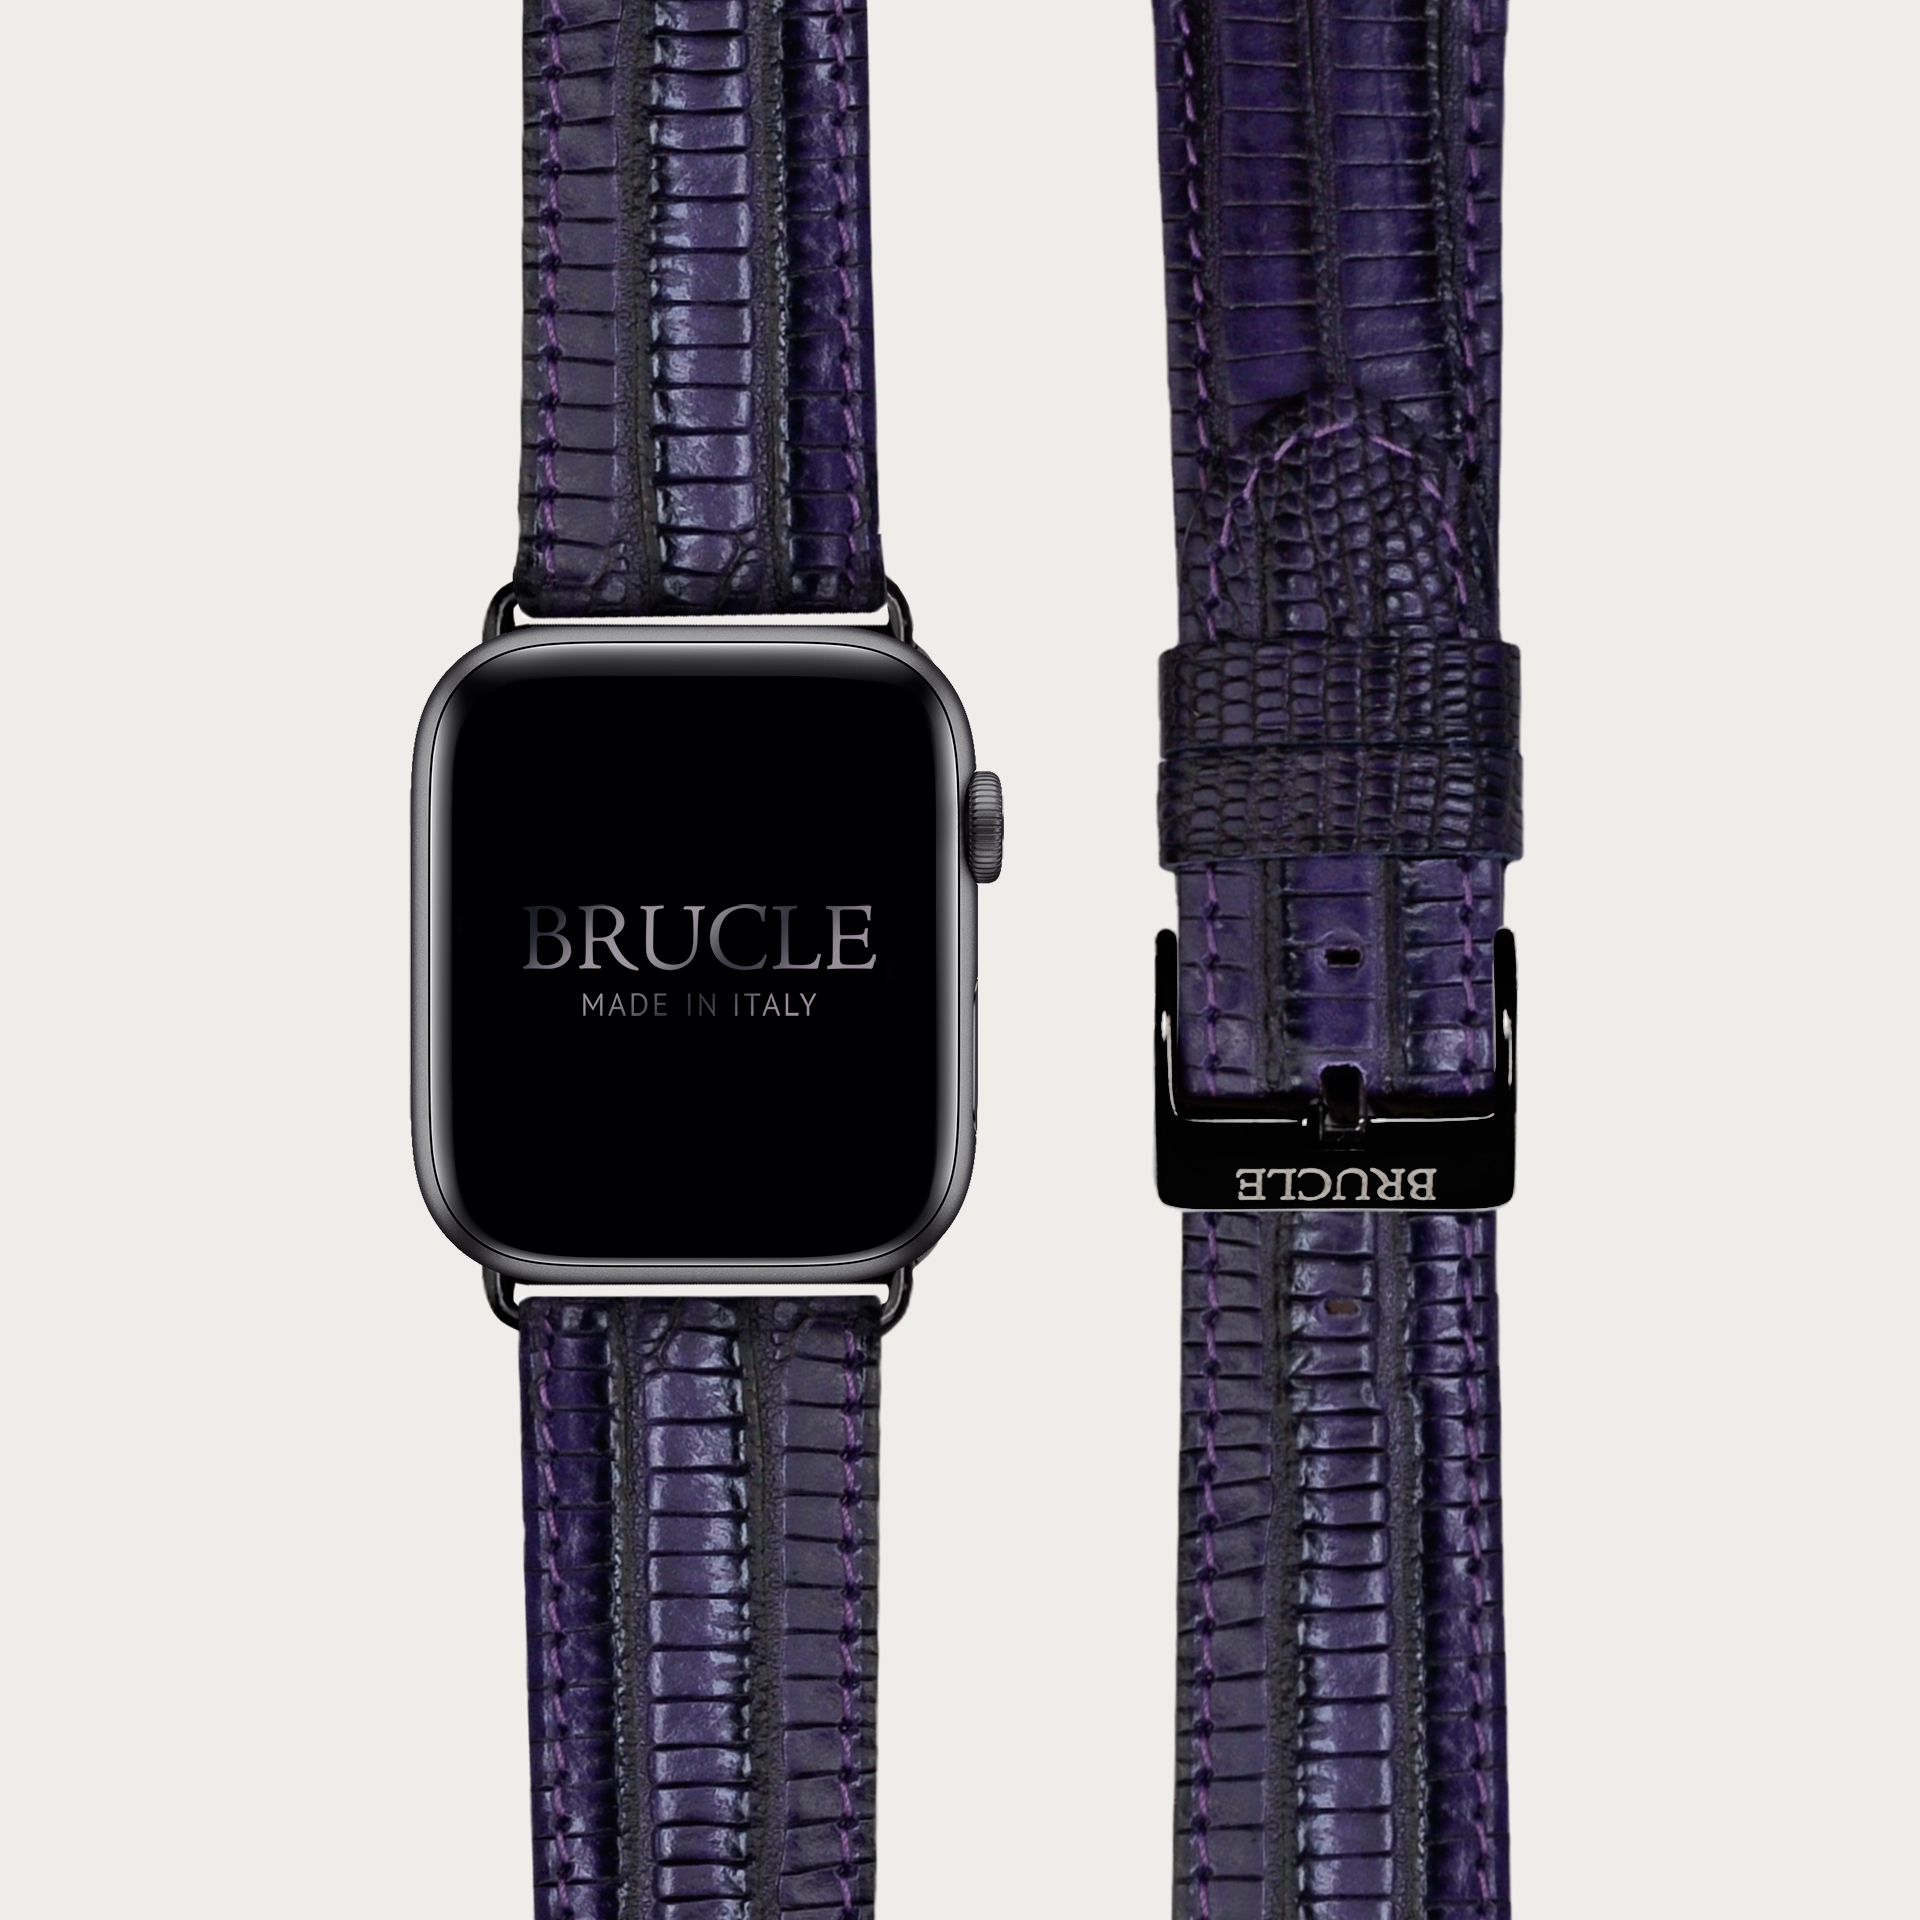 Brucle Armband kompatibel mit Apple Watch / Samsung Smartwatch, lilafarbenes Leder mit Tejus-Print